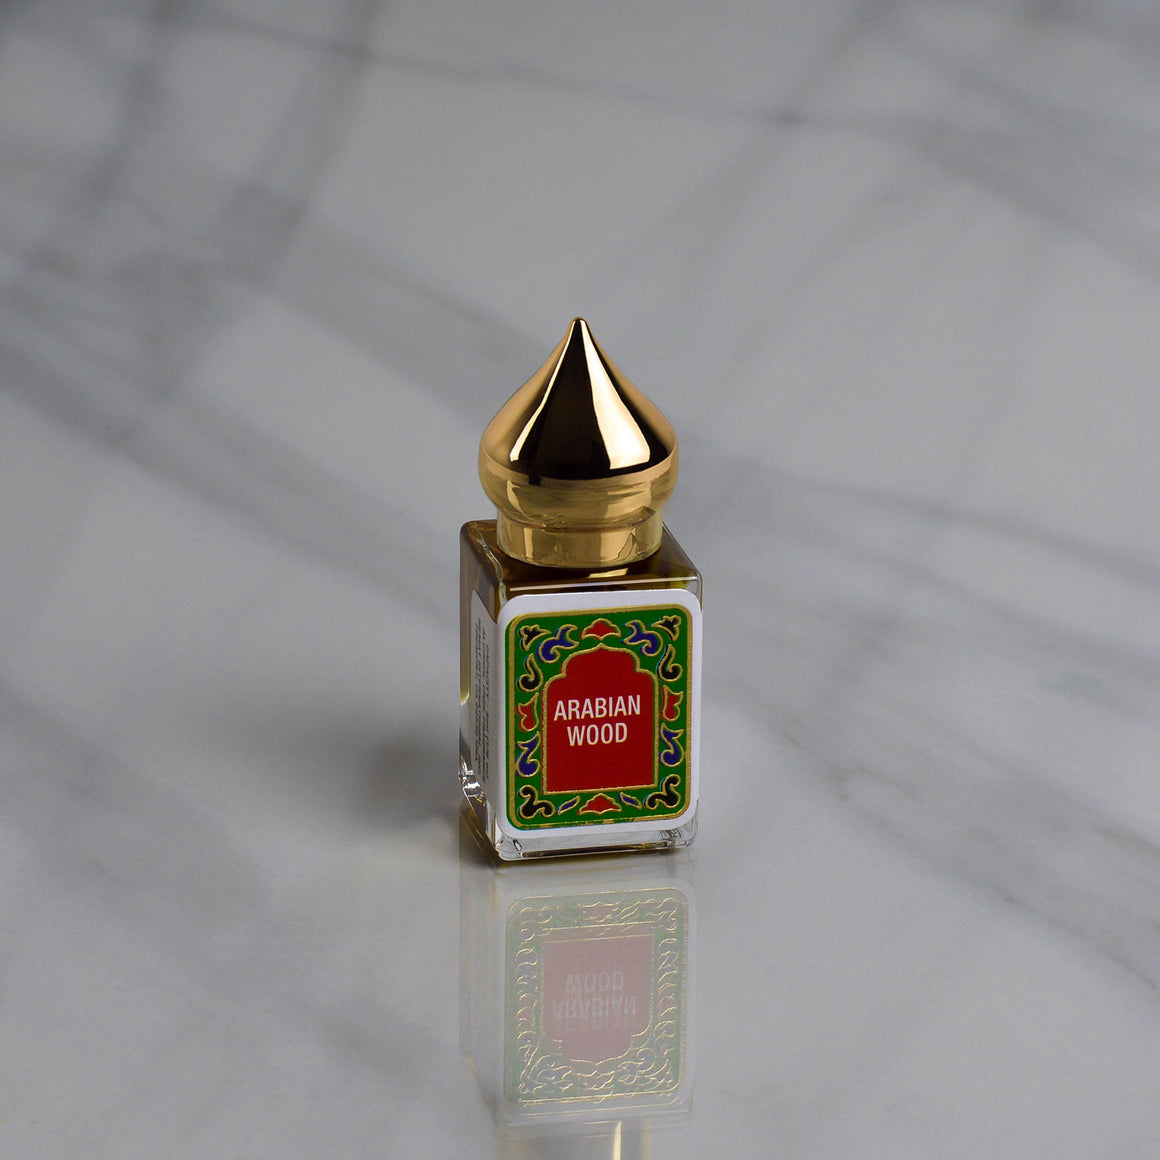 Arabian Wood Fragrance Oil